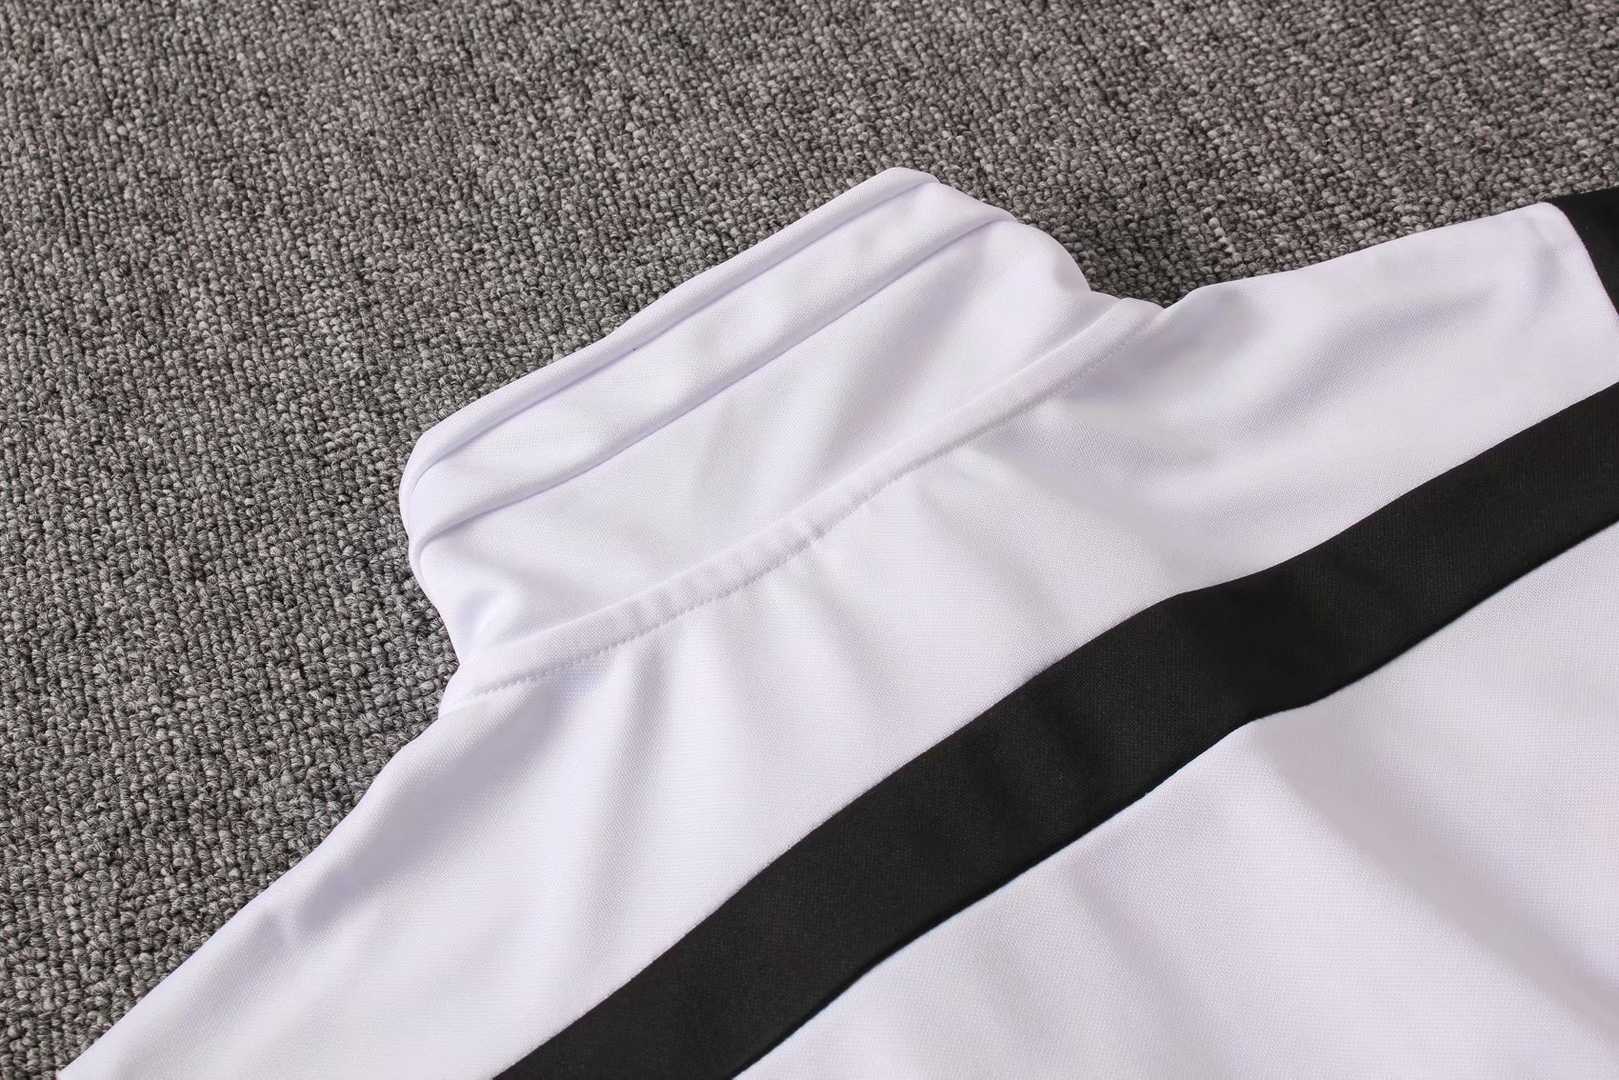 2019/20 Juventus High Neck White Mens Soccer Training Suit(Jacket + Pants)